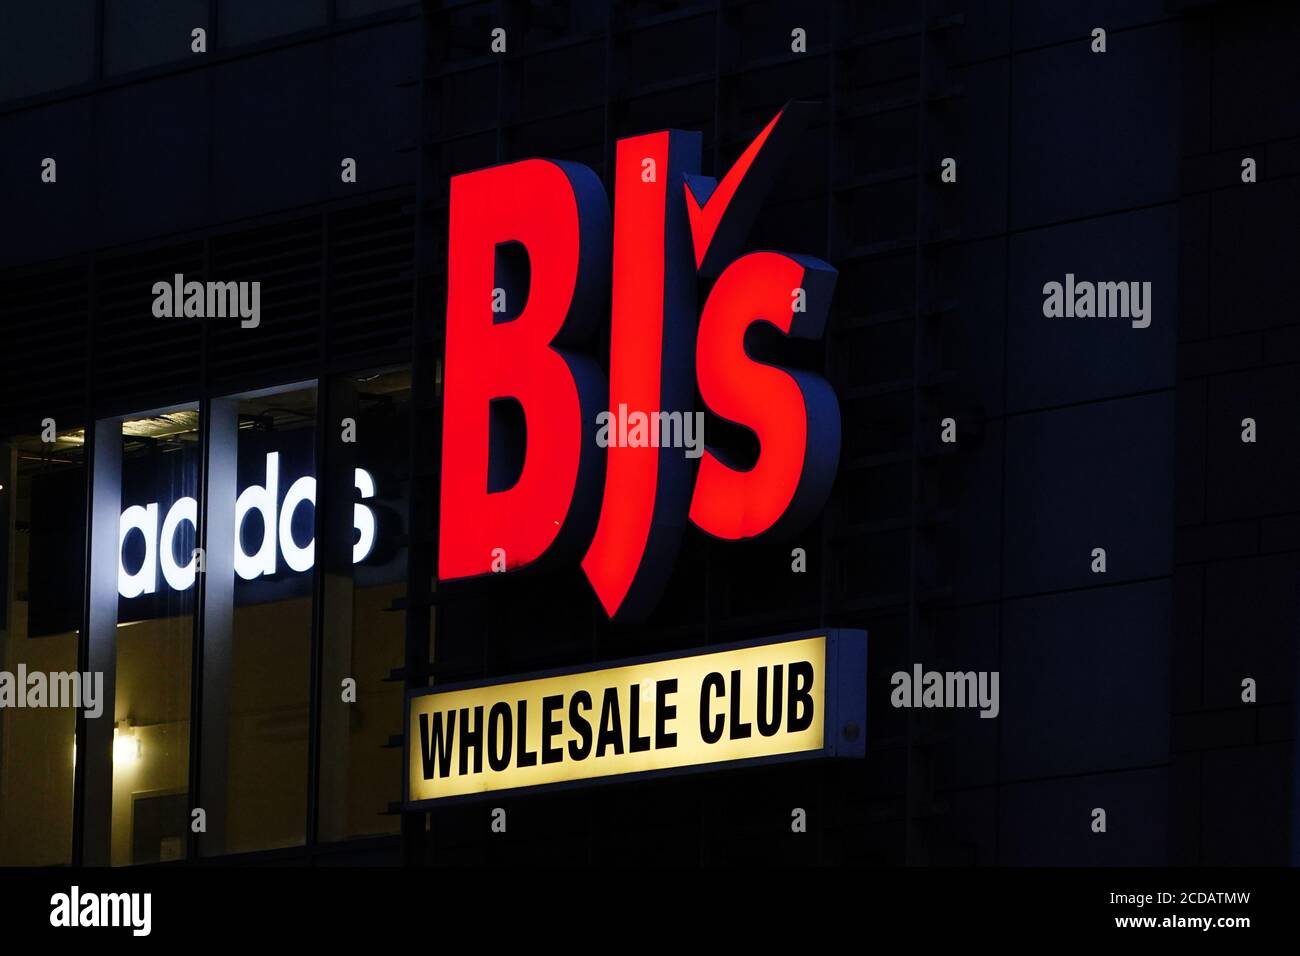 Bjs bjs wholesale club hi-res stock photography and images - Alamy